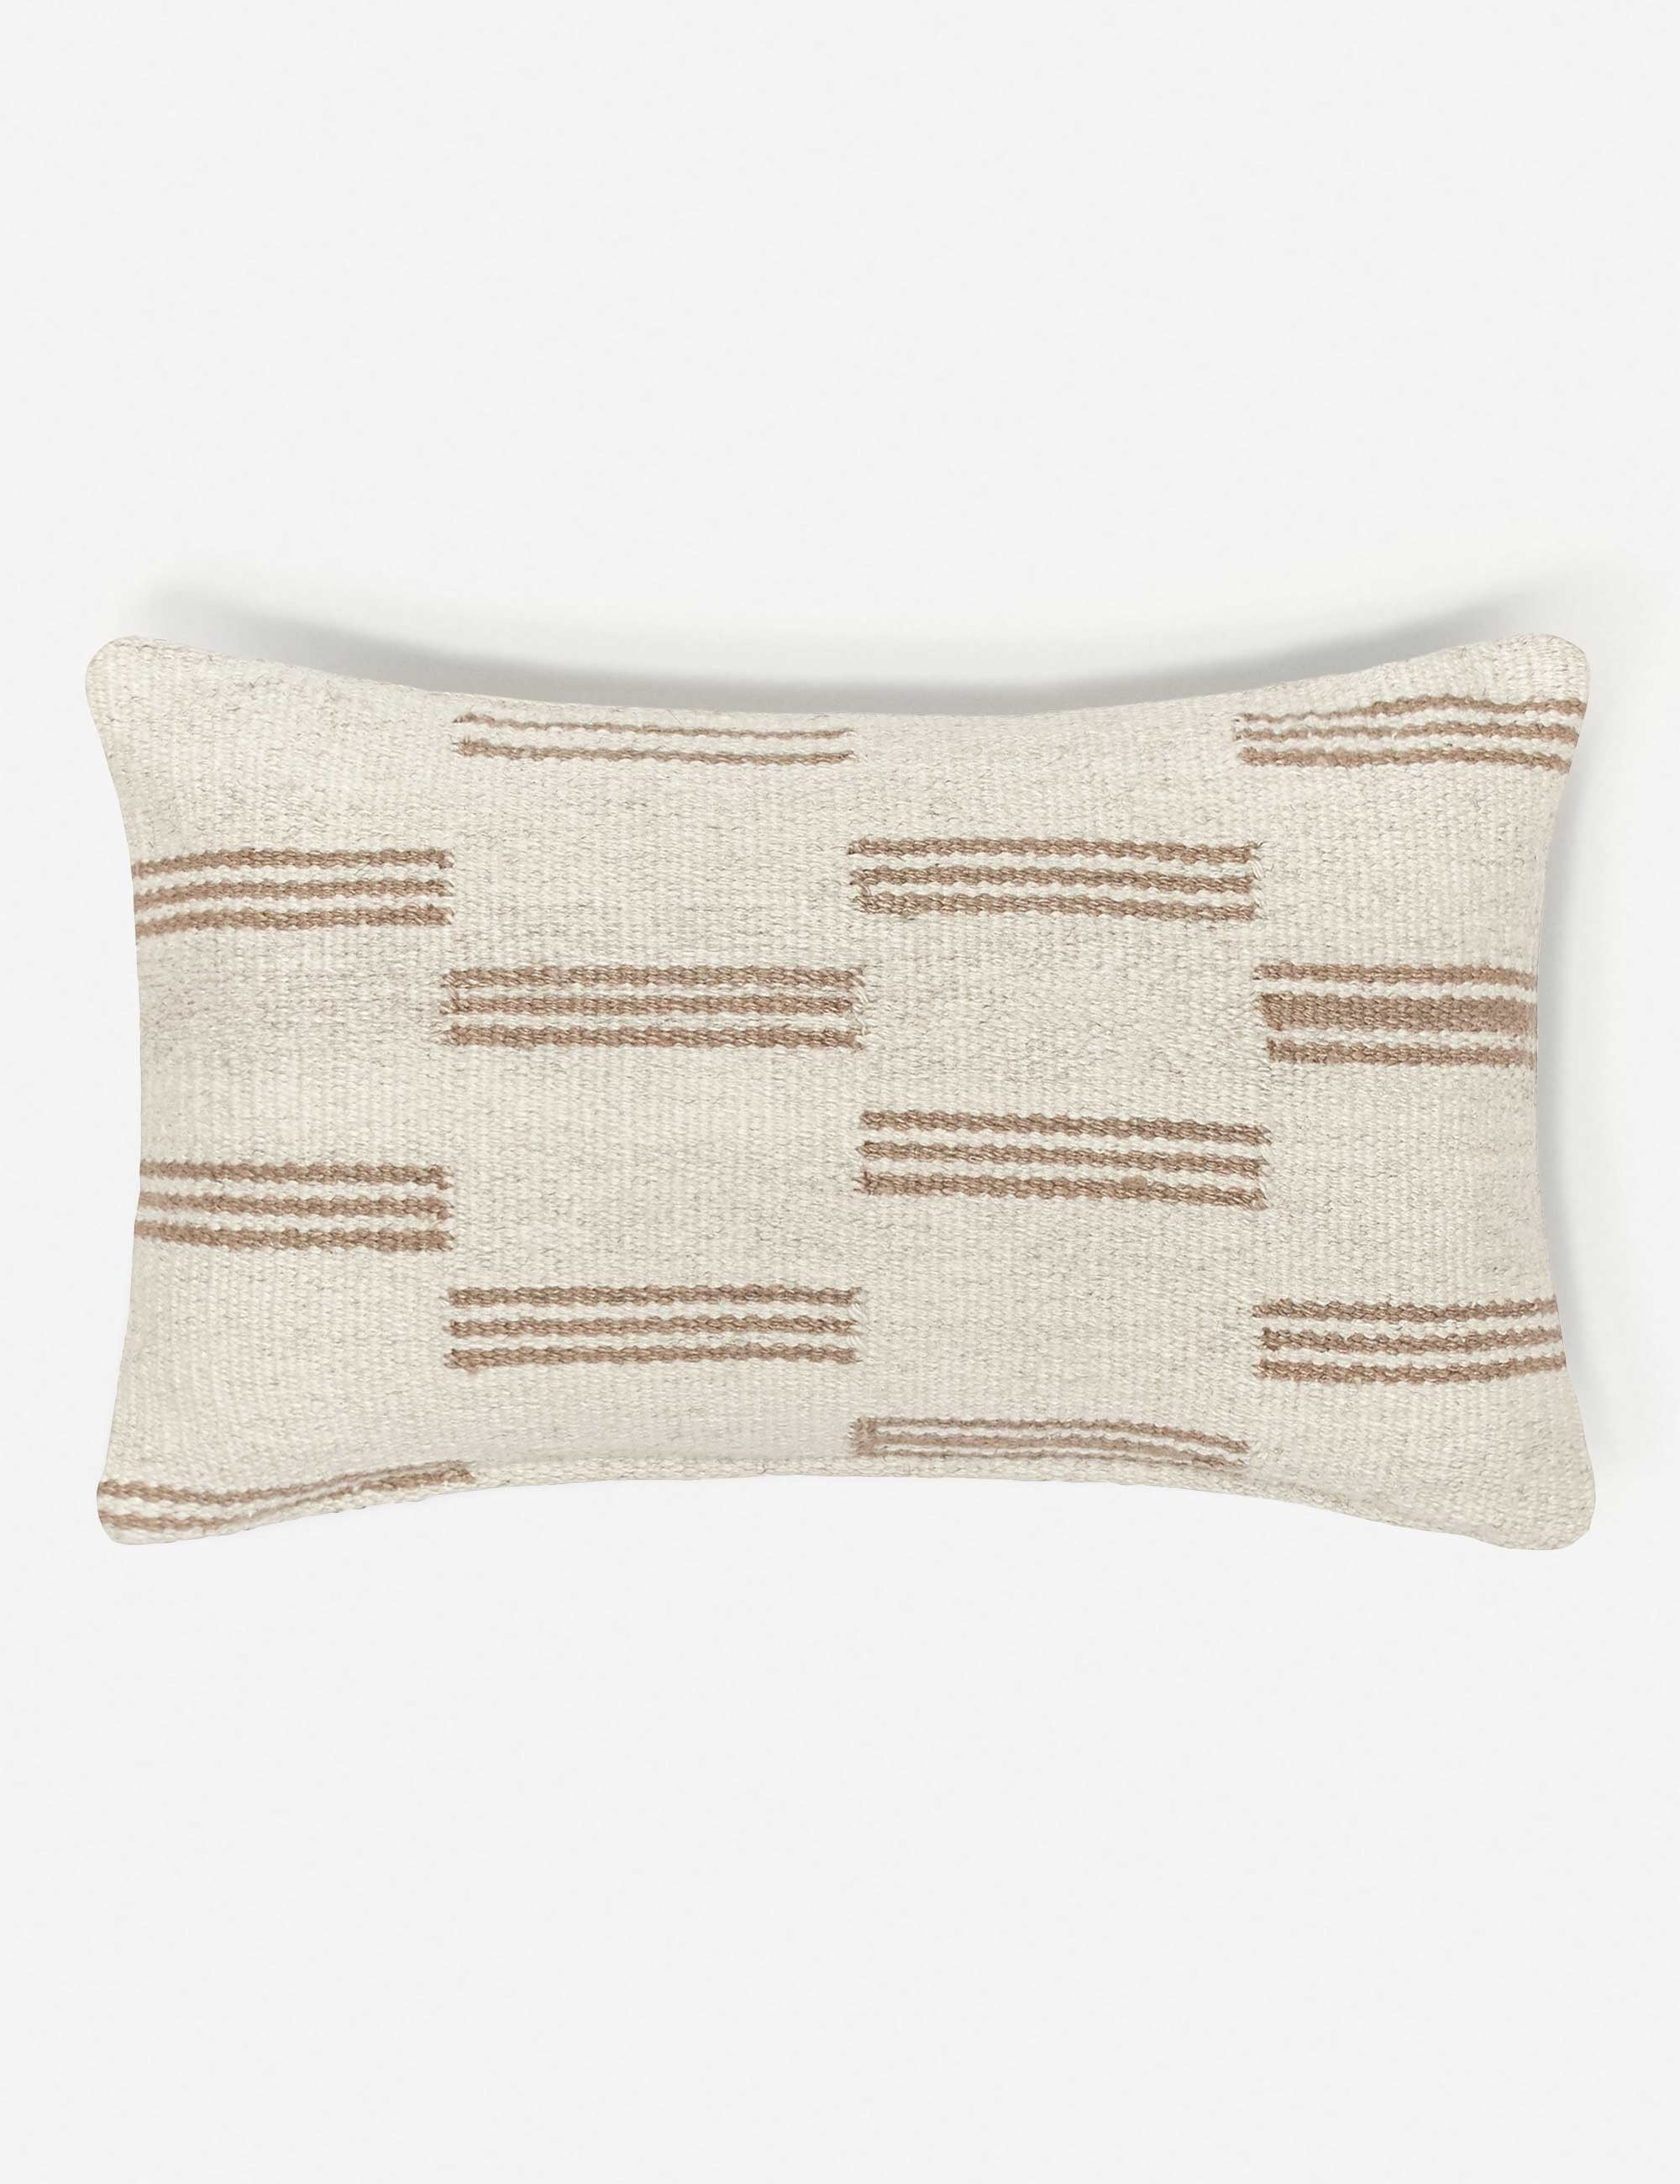 Stripe Break Pillow by Sarah Sherman Samuel - Image 7